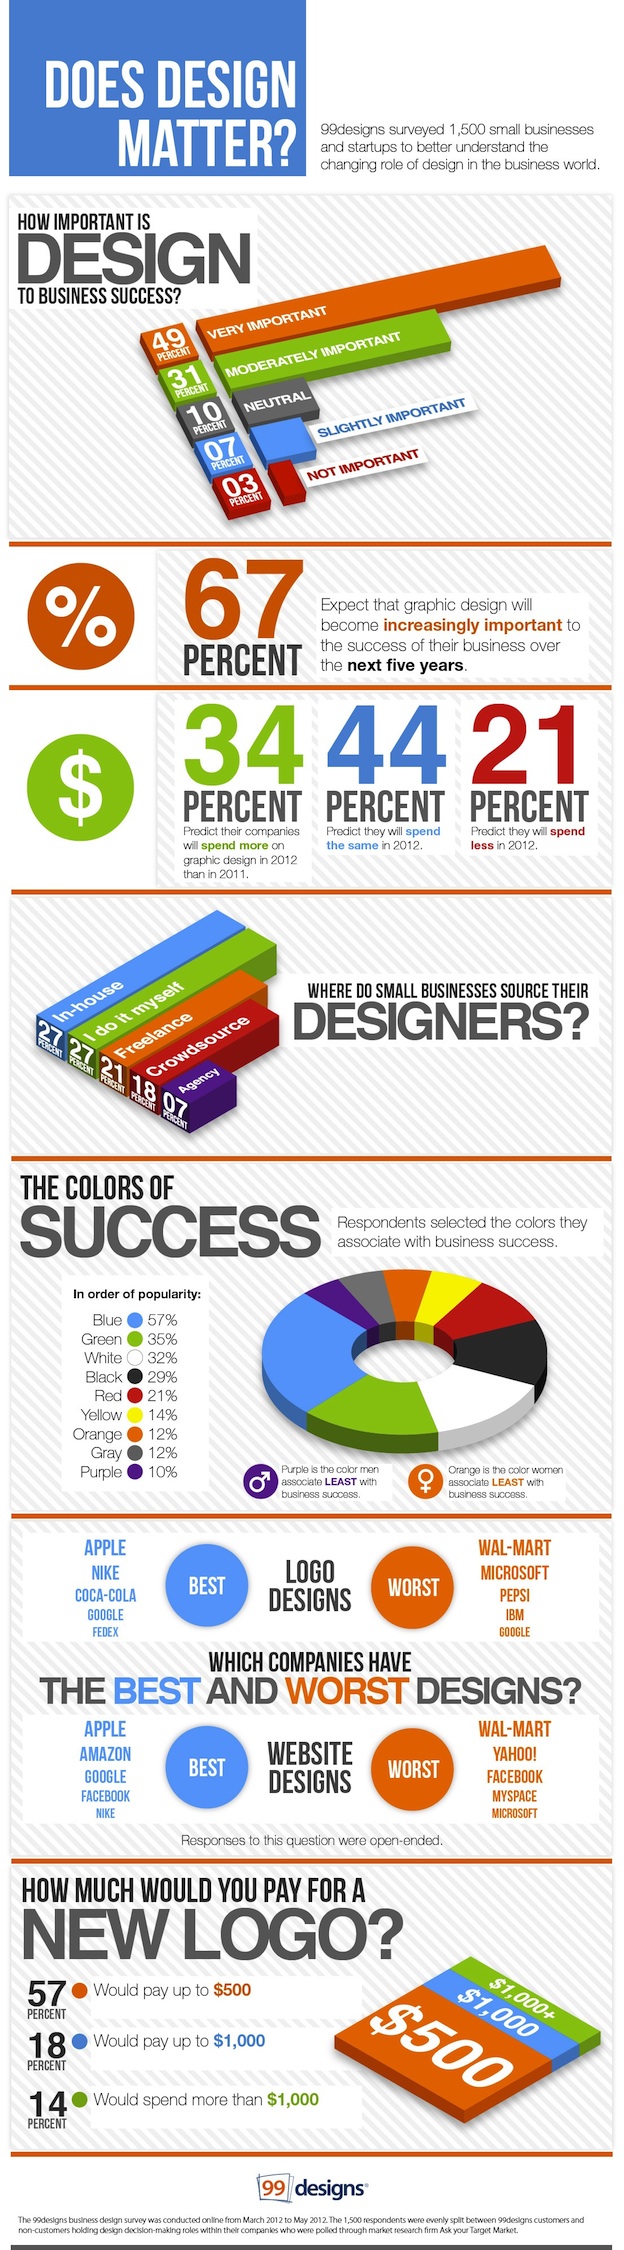 99designs-design-survey-infographic-sized-for-blog-post